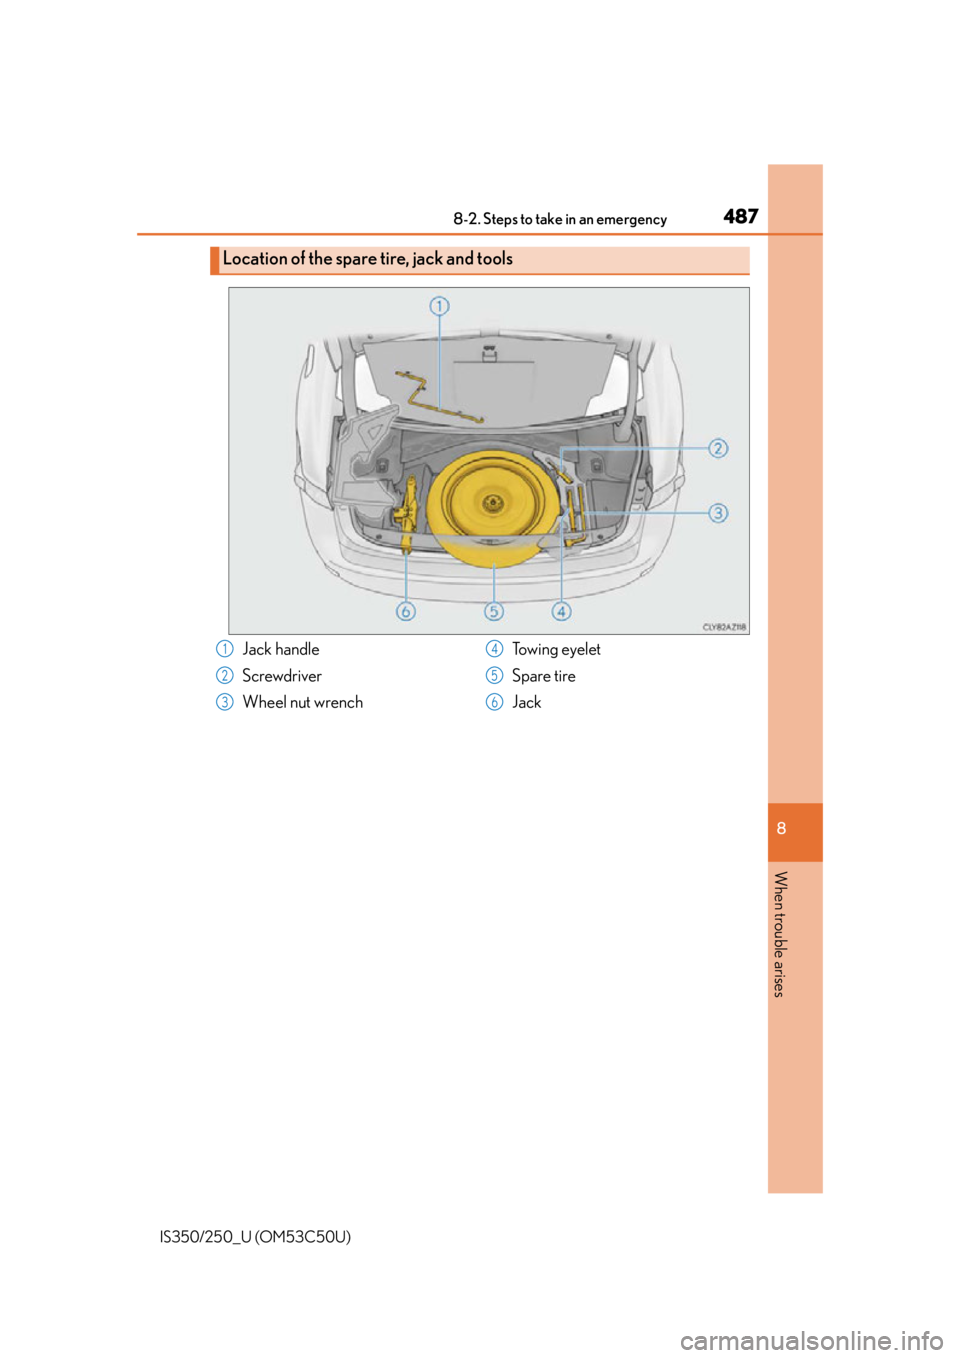 Lexus IS250 2015  Steering wheel / LEXUS 2015 IS250/350 OWNERS MANUAL (OM53C50U) 4878-2. Steps to take in an emergency
8
When trouble arises
IS350/250_U (OM53C50U)
Location of the spare tire, jack and tools
Jack handle
Screwdriver
Wheel nut wrenchTowing eyelet
Spare tire
Jack1
2
3